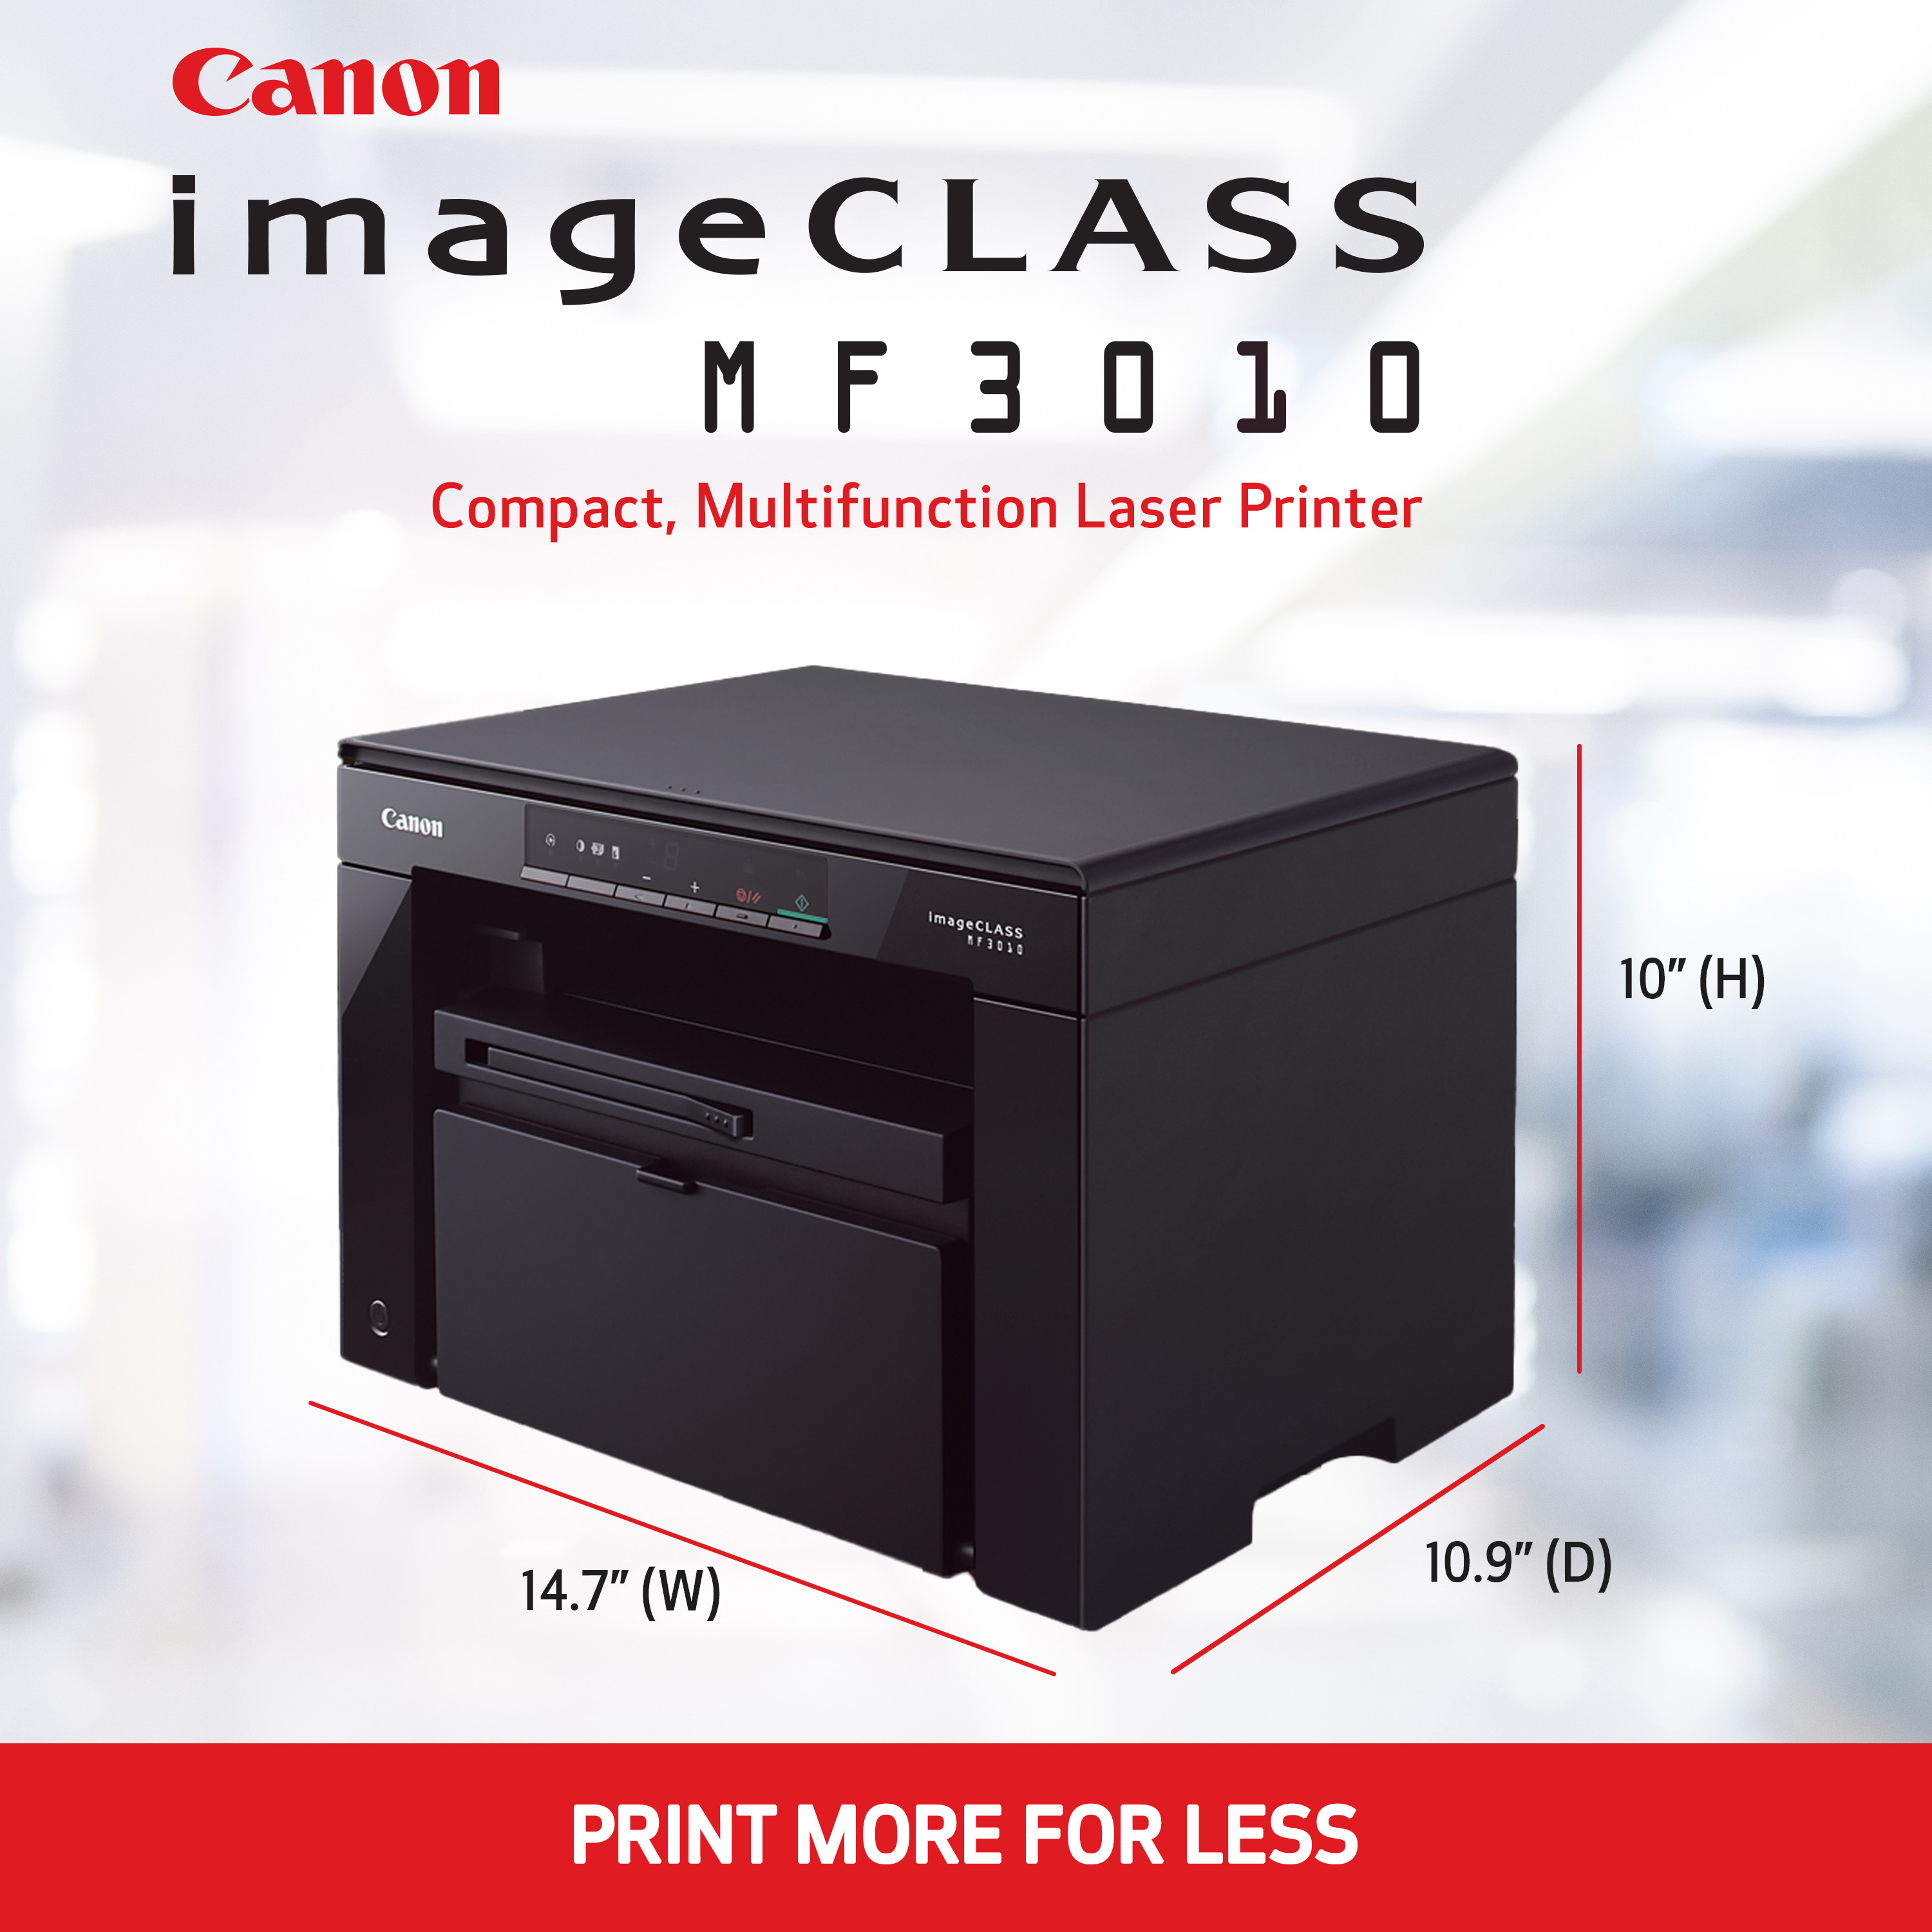 Canon imageCLASS MF3010 - Multifunction Laser Printer - image 4 of 9